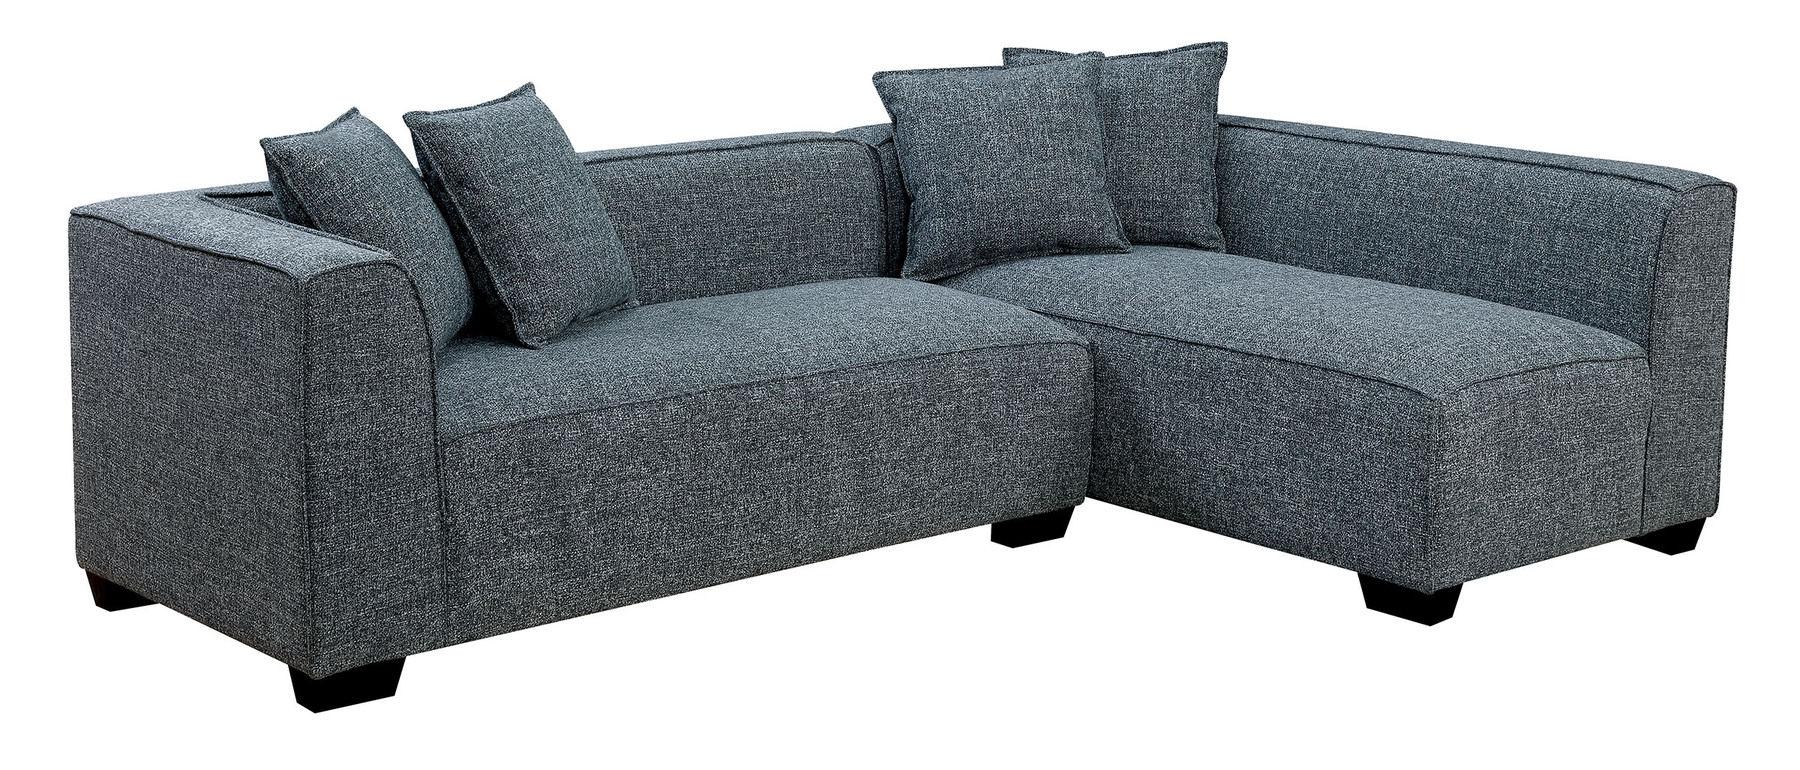 Contemporary Sectional Sofa JAYLENE CM6120 CM6120 in Gray 